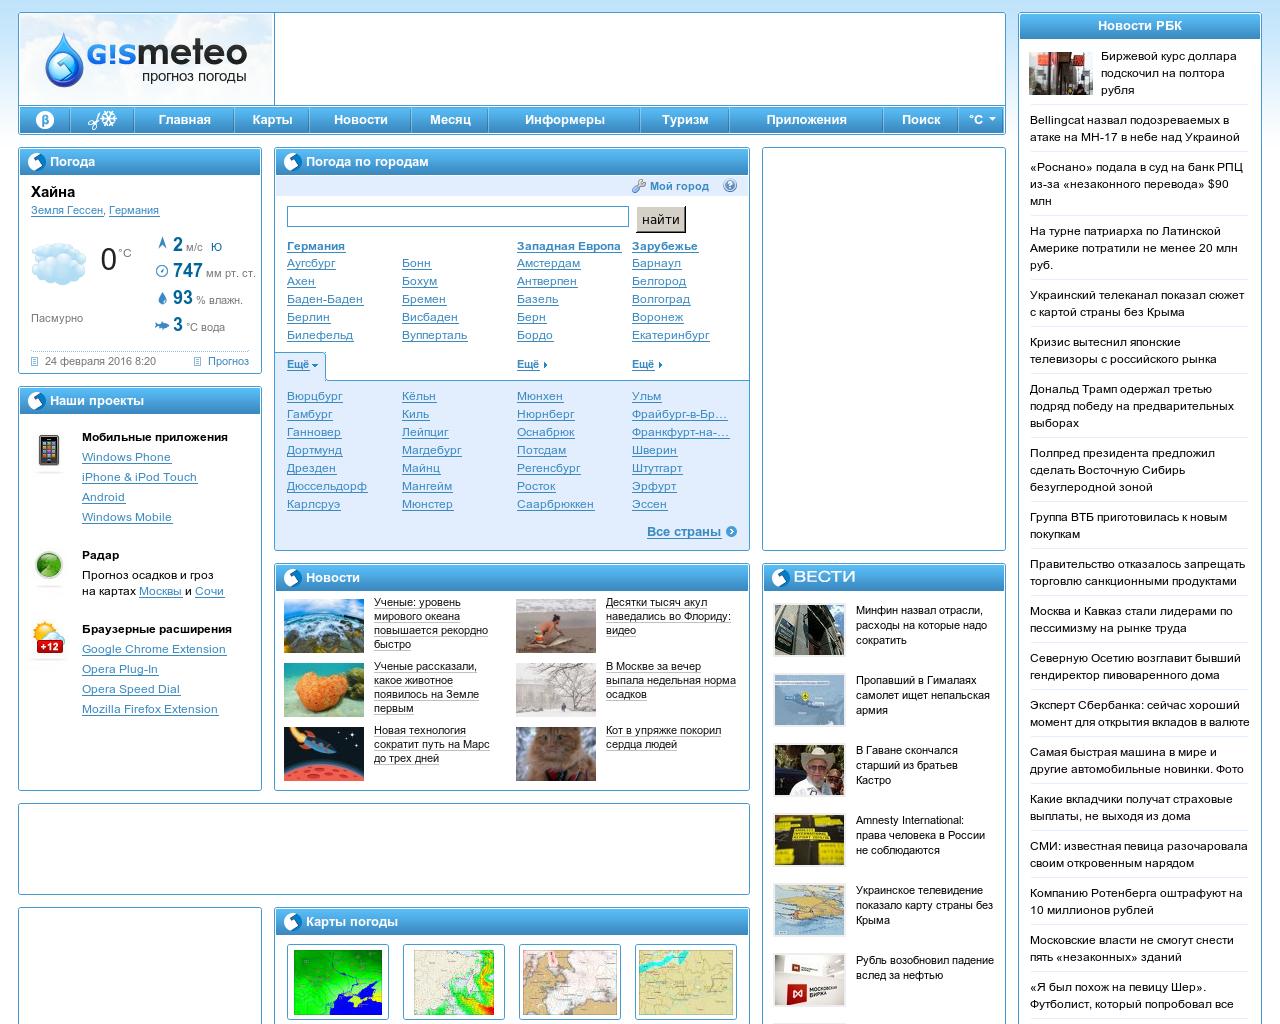 Изображение сайта gismeteo.ru в разрешении 1280x1024